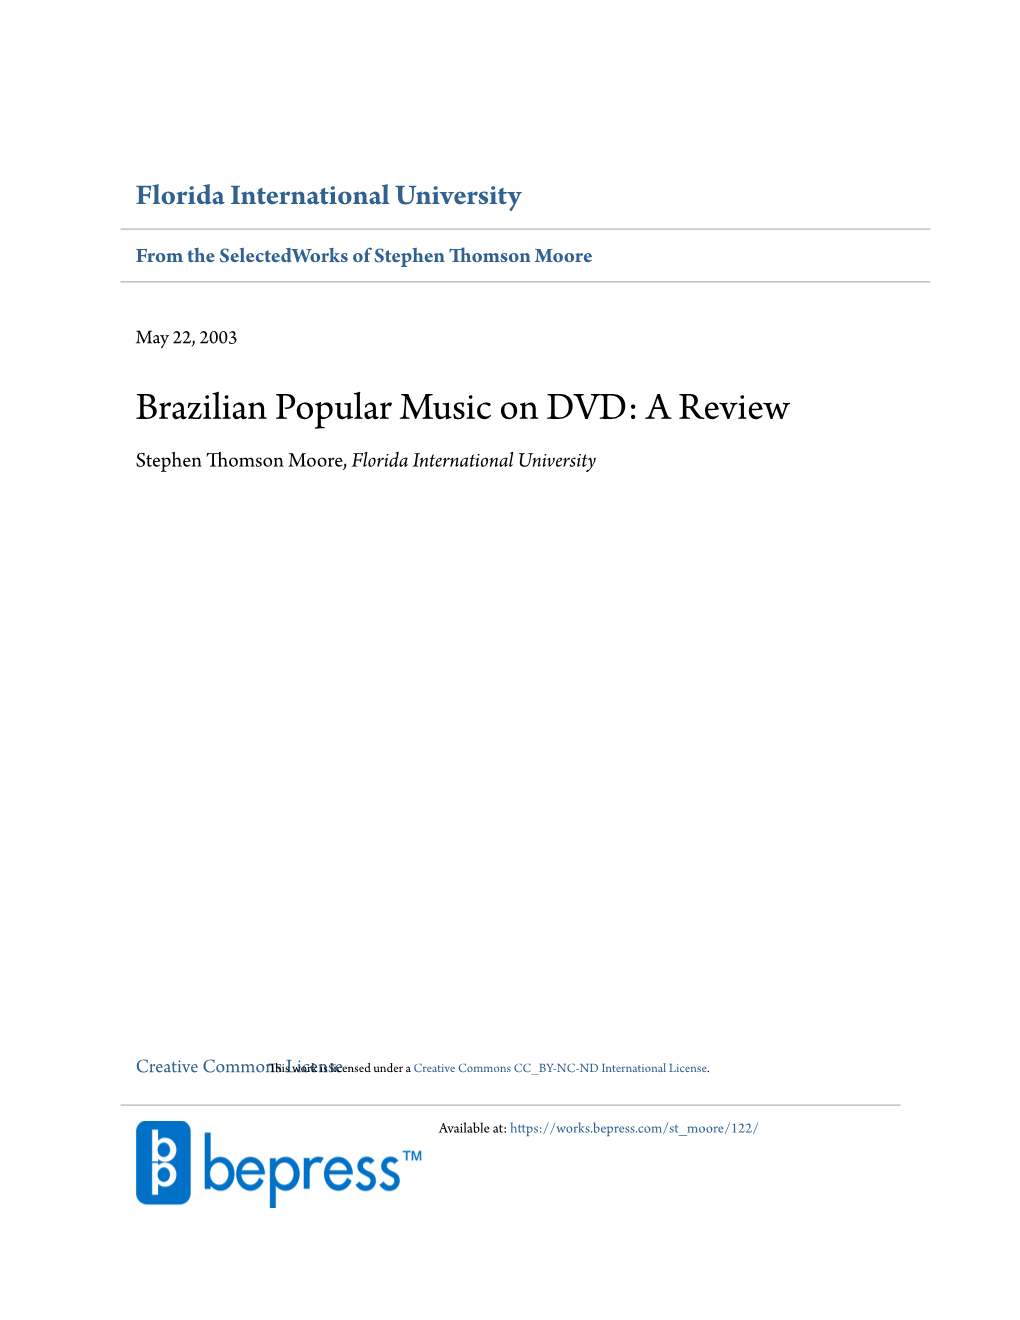 Brazilian Popular Music on DVD: a Review Stephen Thomson Moore, Florida International University